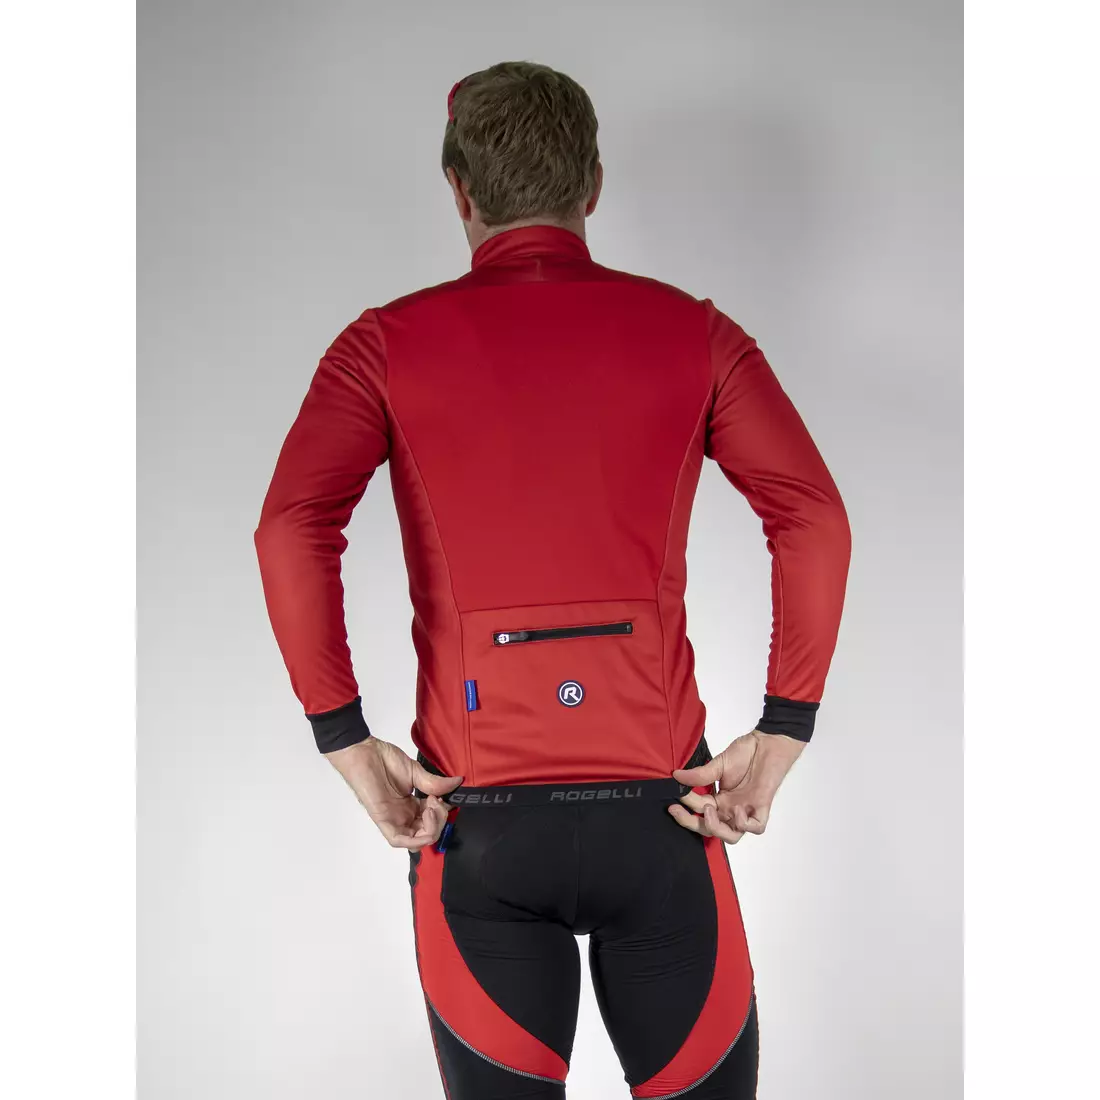 ROGELLI PESARO 2.0 winter cycling jacket, red